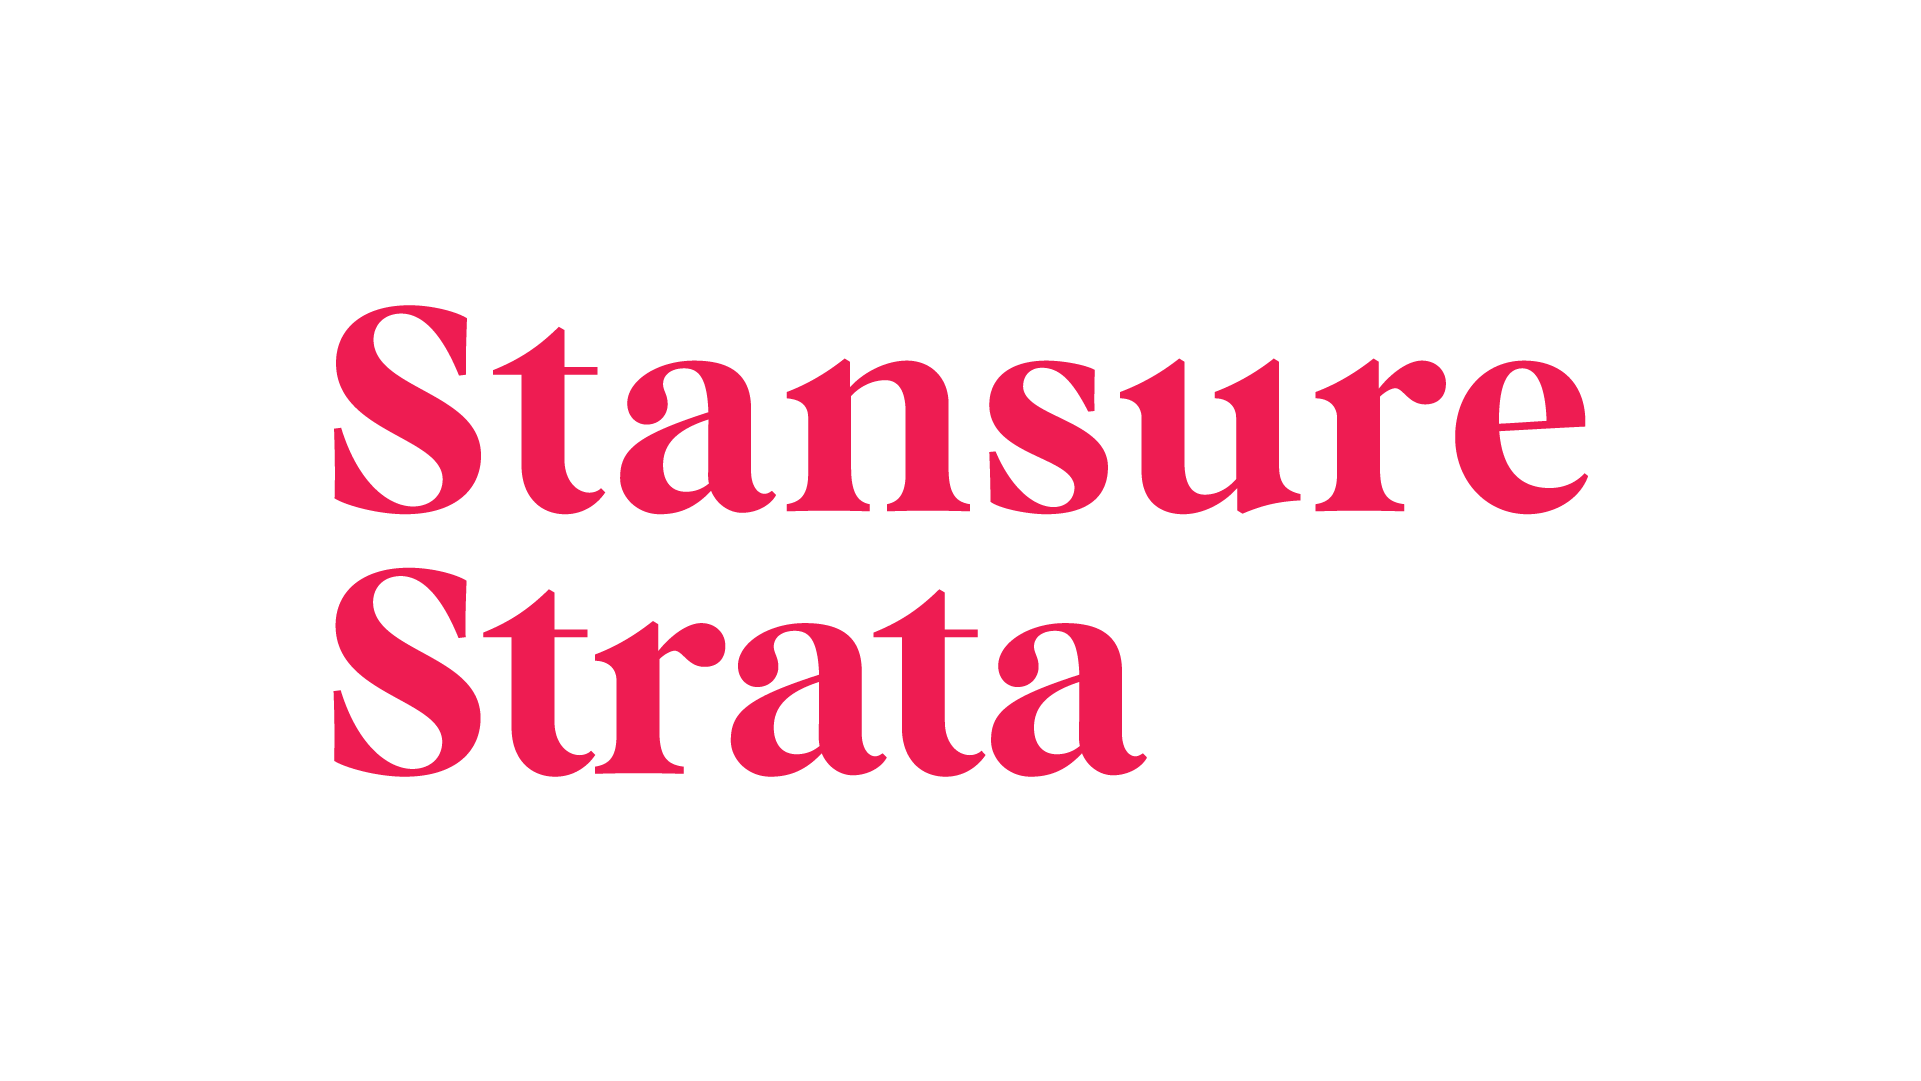 Stansure Strata